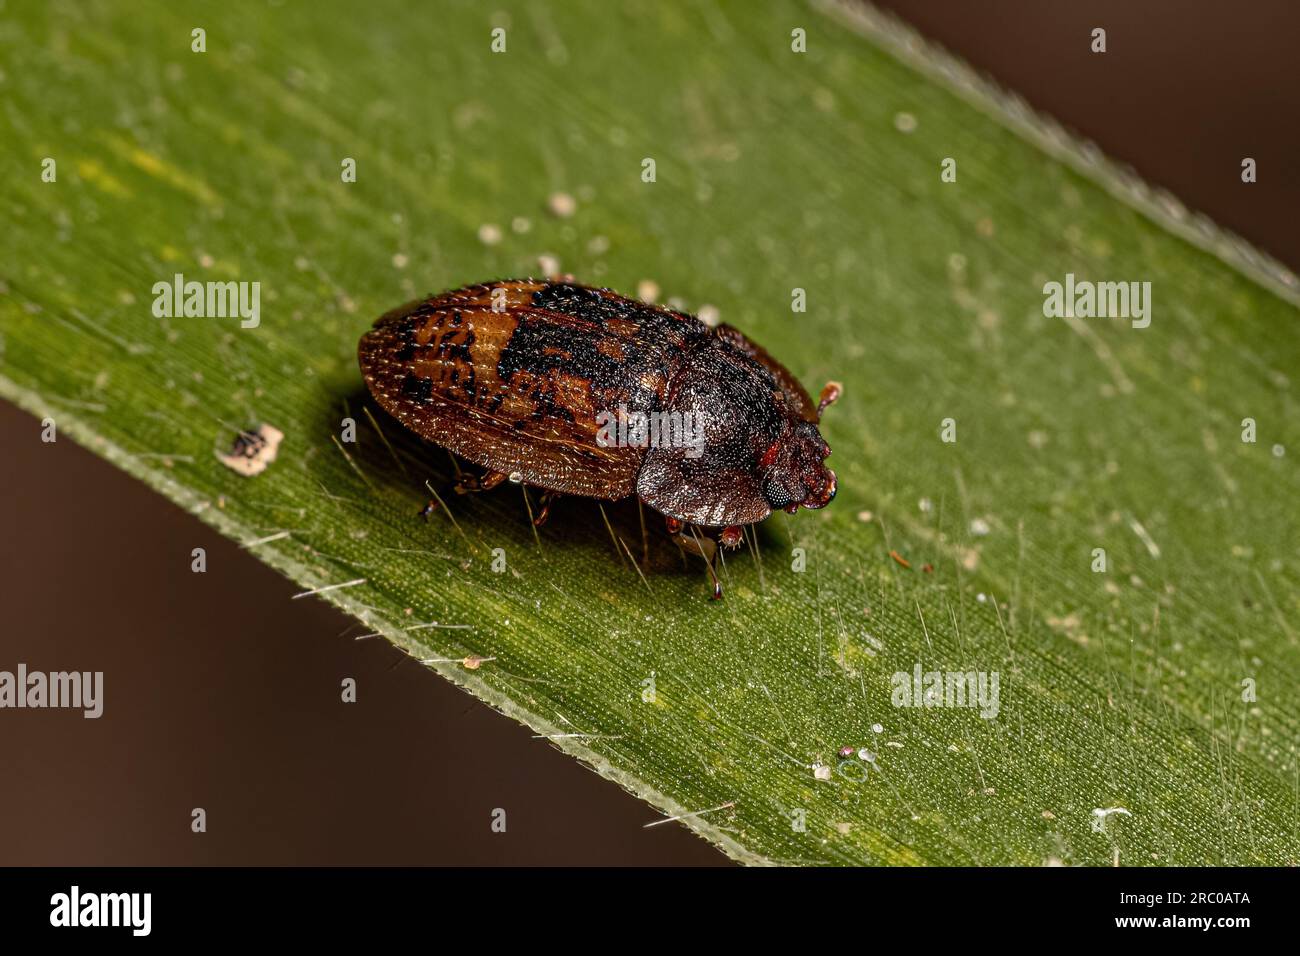 Adult Sap-feeding Beetle of the Family Nitidulidae Stock Photo